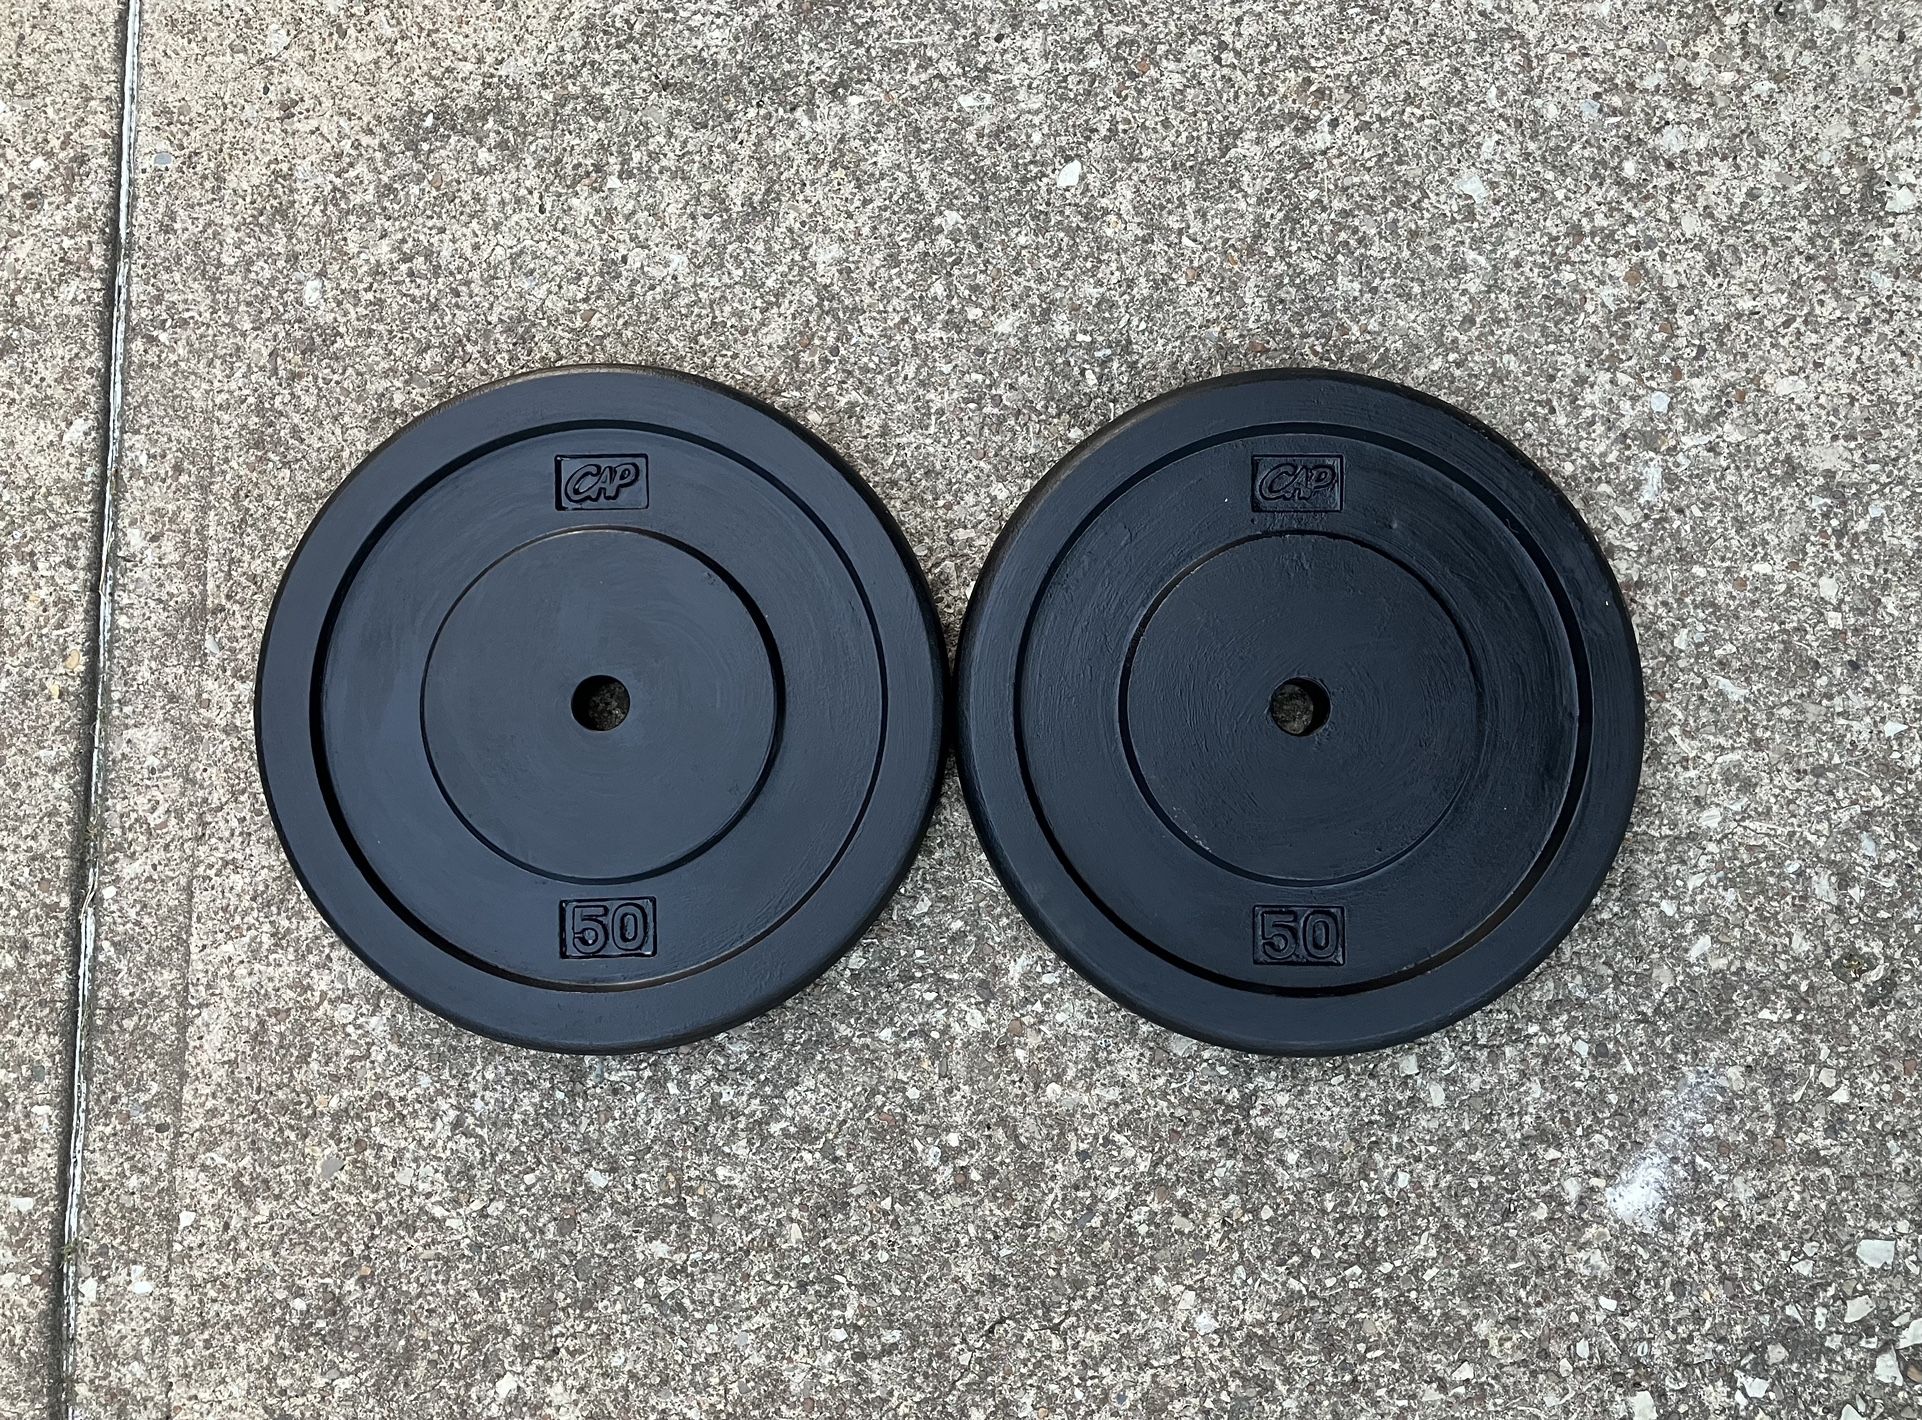 Standard 1" 50 lb weight plate set 100 lbs total weights 50lb 50lbs Cast Iron plates CAP brand